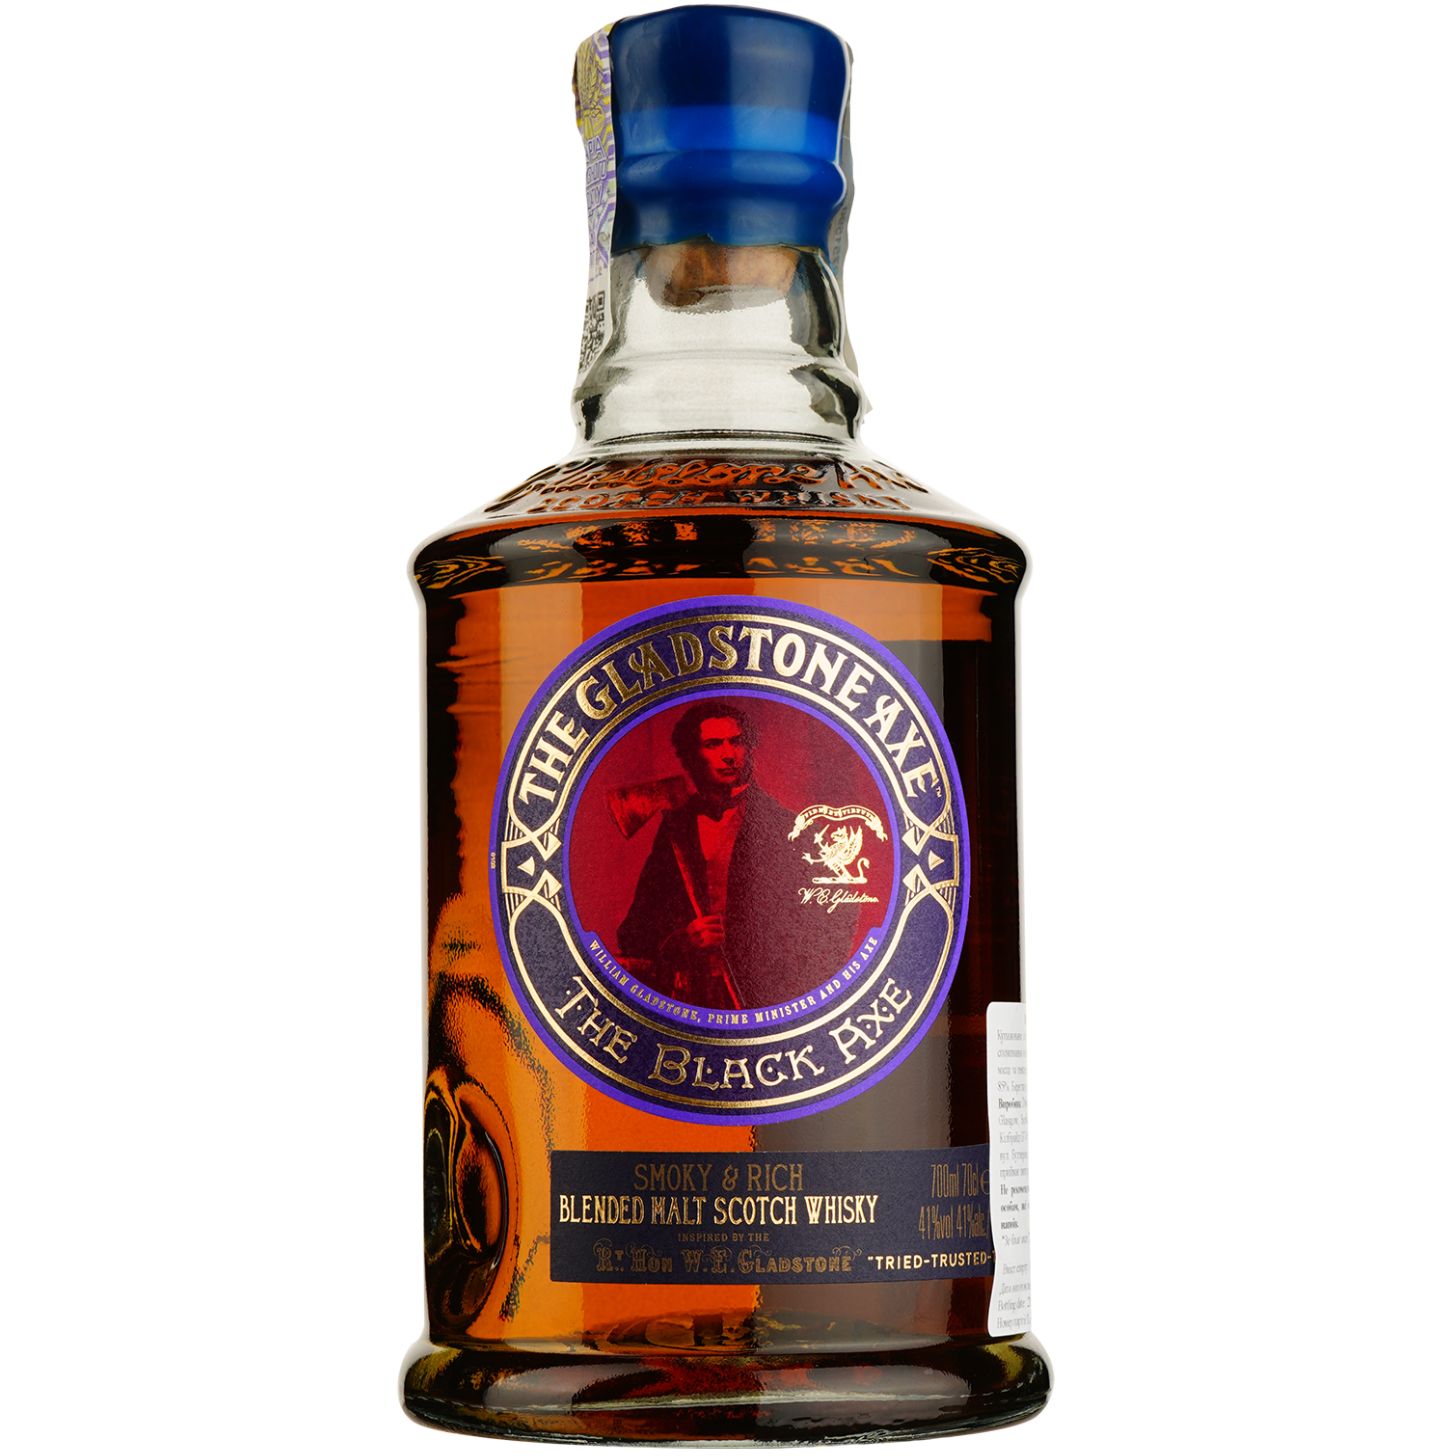 Виски The Gladstone Axe Black Blended Malt Scotch Whisky, 41%, 0,7 л - фото 1